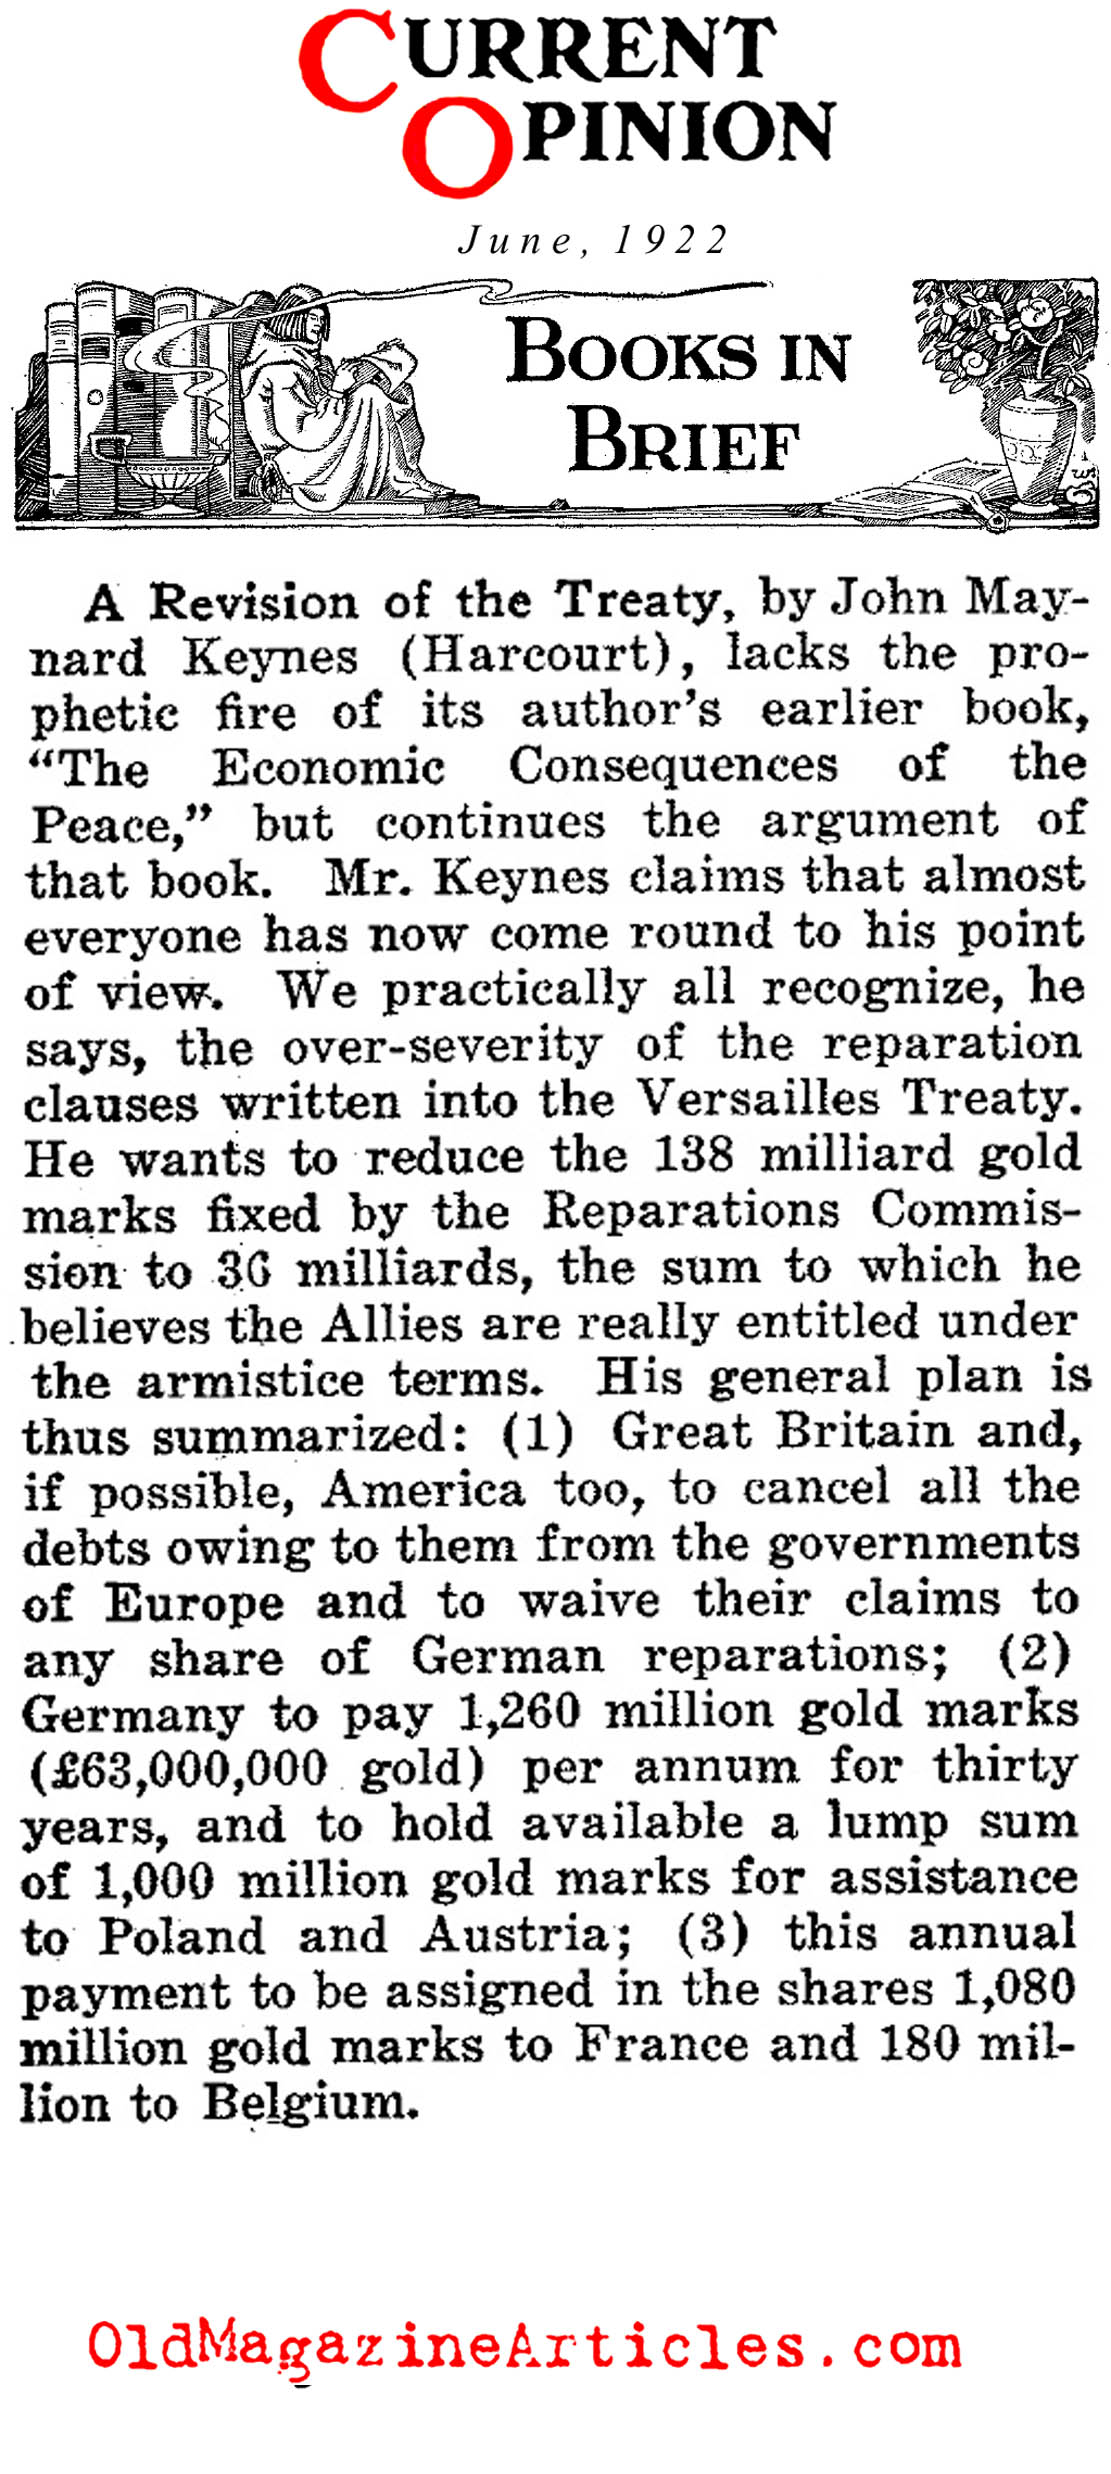 John Maynard Keynes on the Versailles Treaty (Current Opinion, 1922)